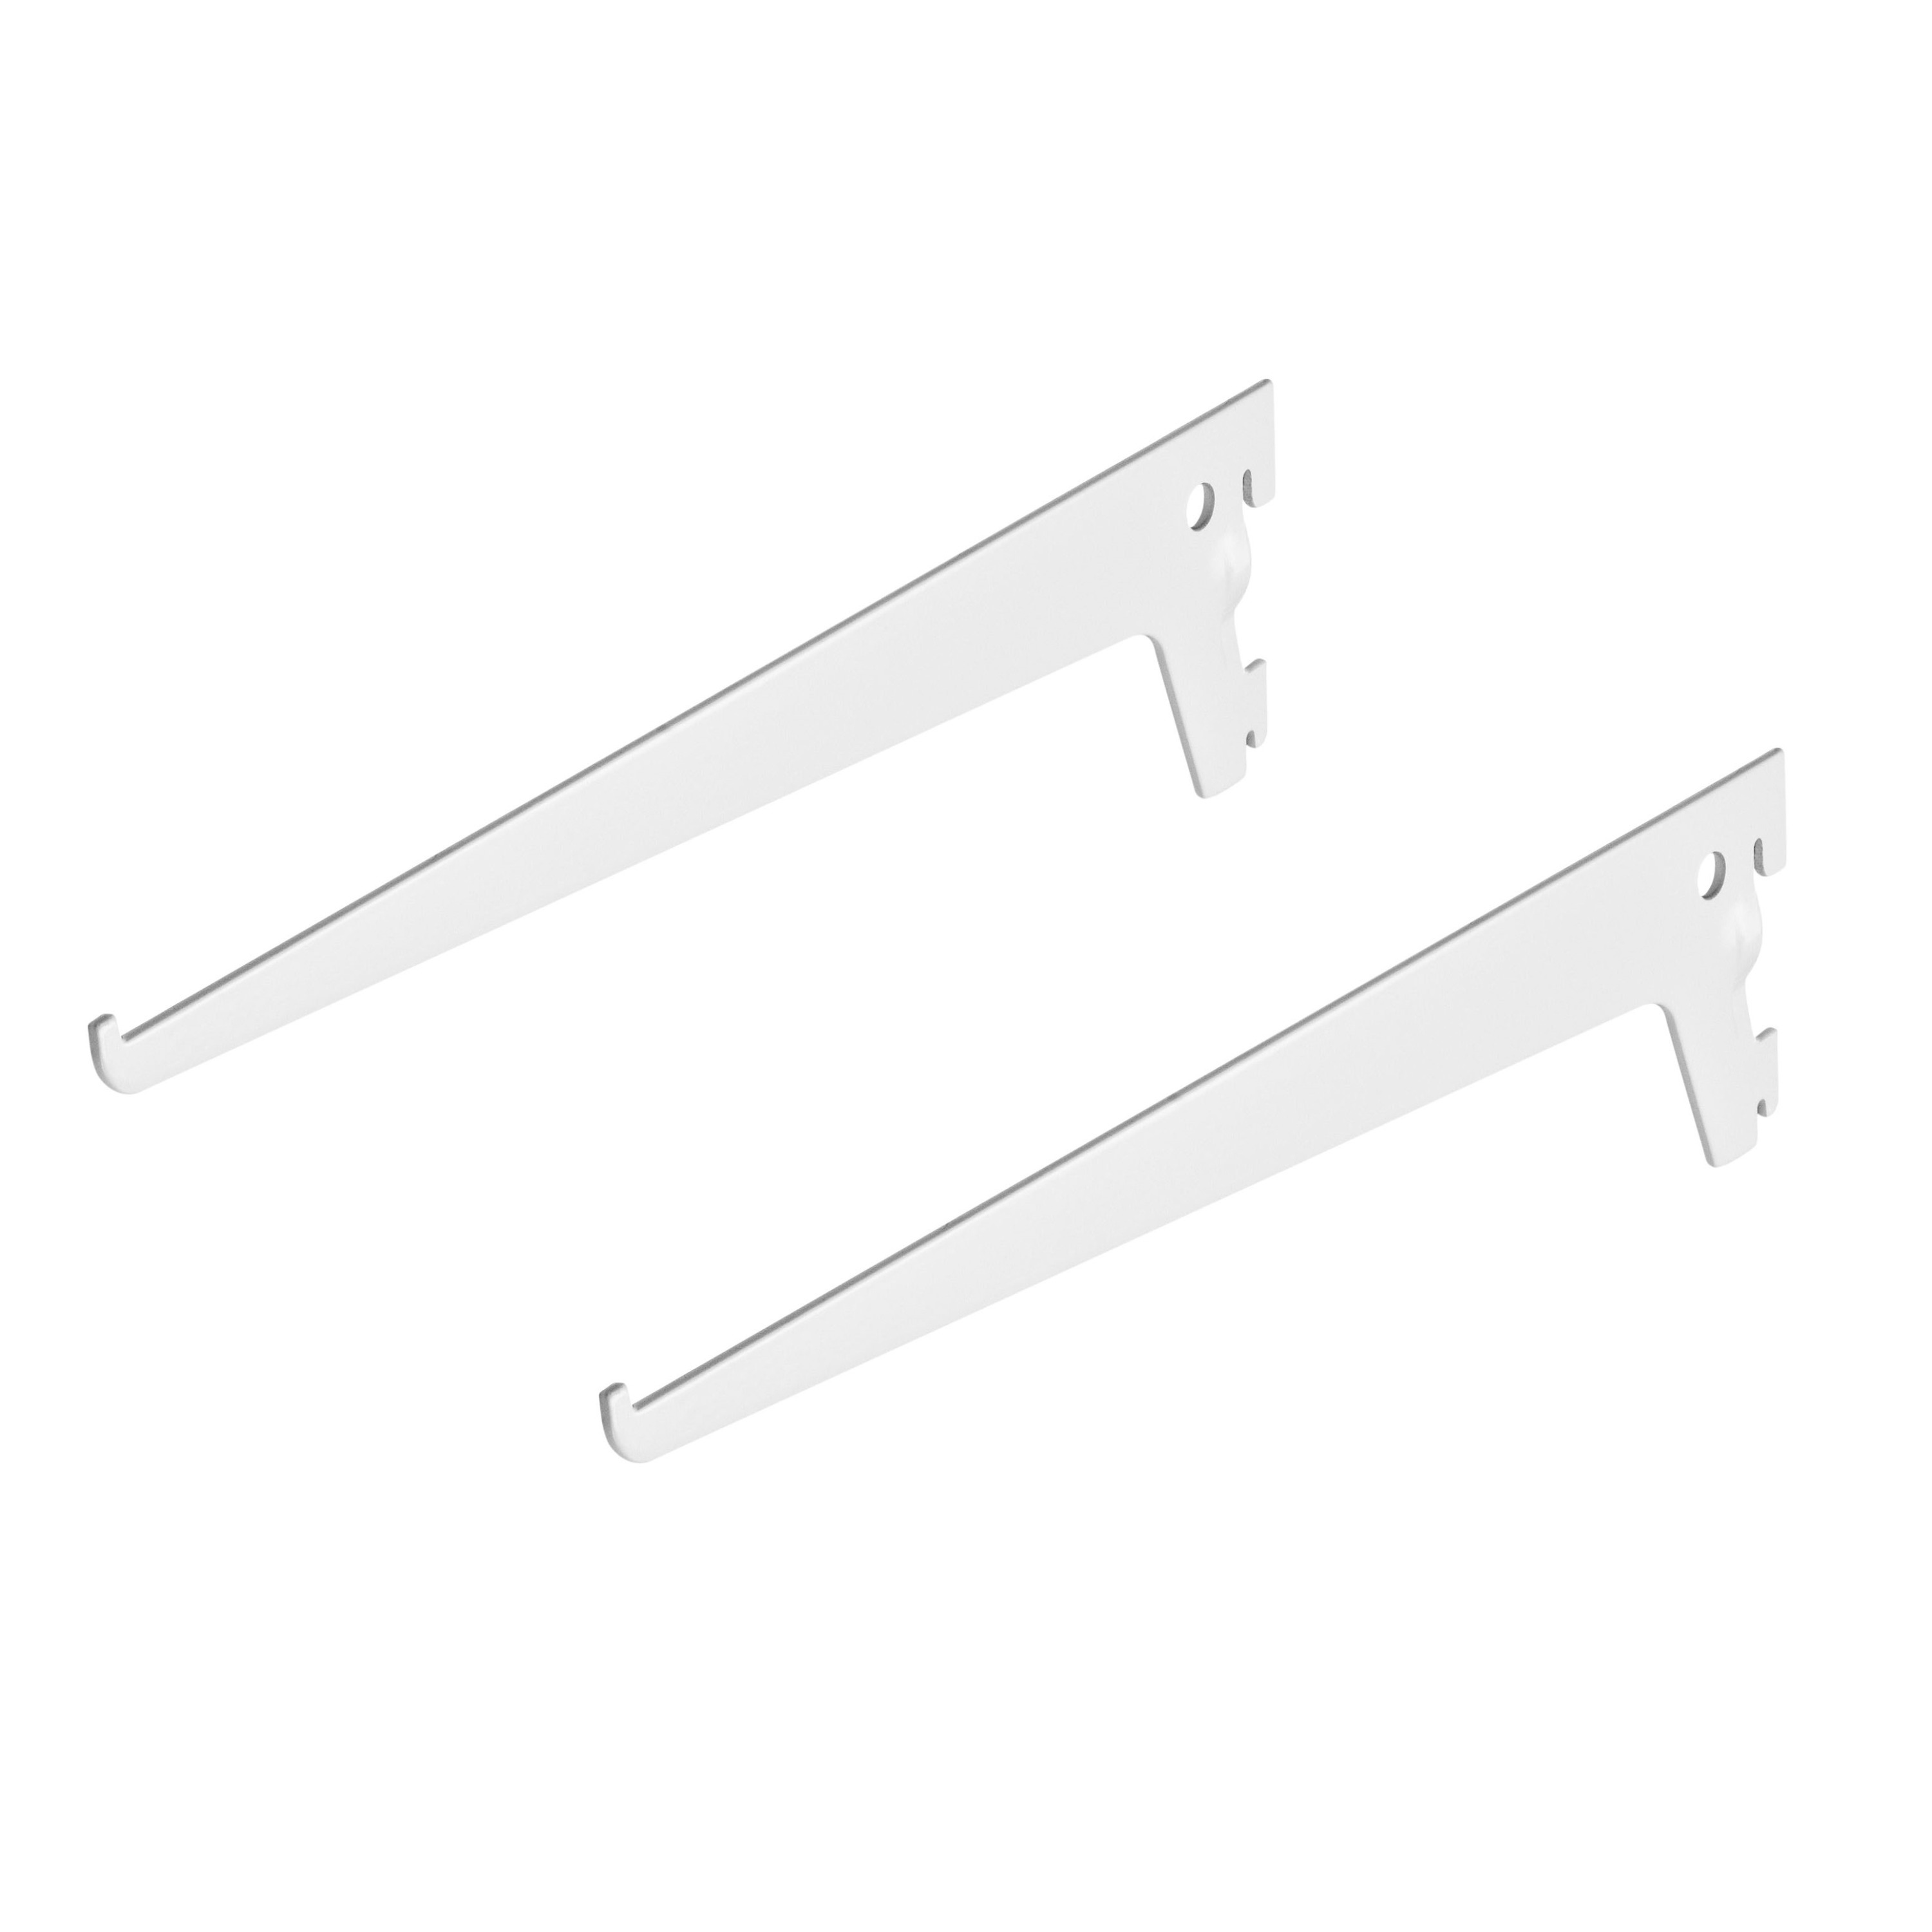 2x stuks Plankdragers-wandplank staal wit 25 cm